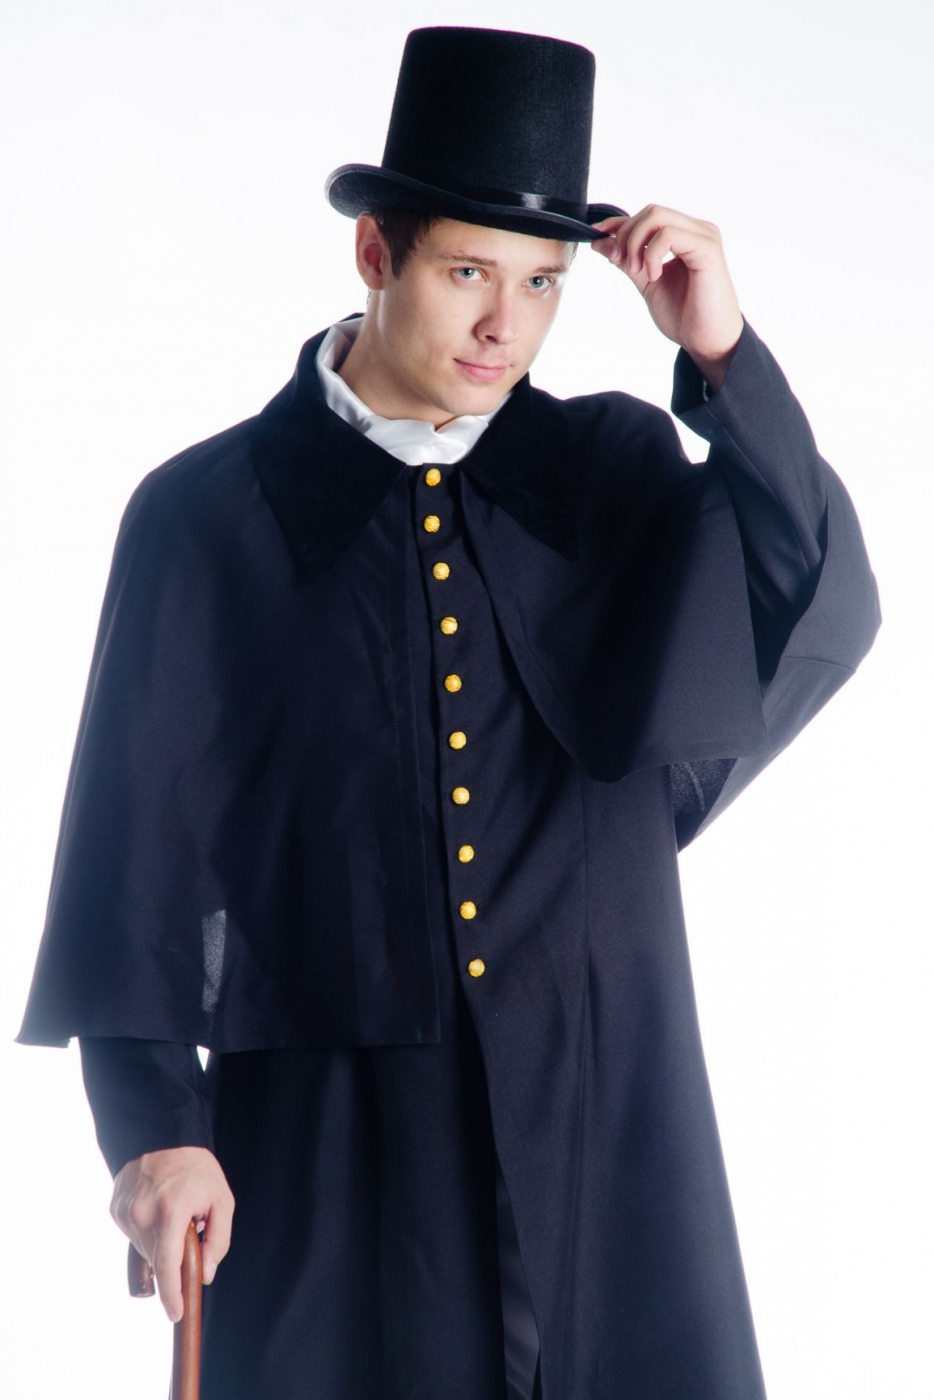 Pushkin costume for man with black cloak